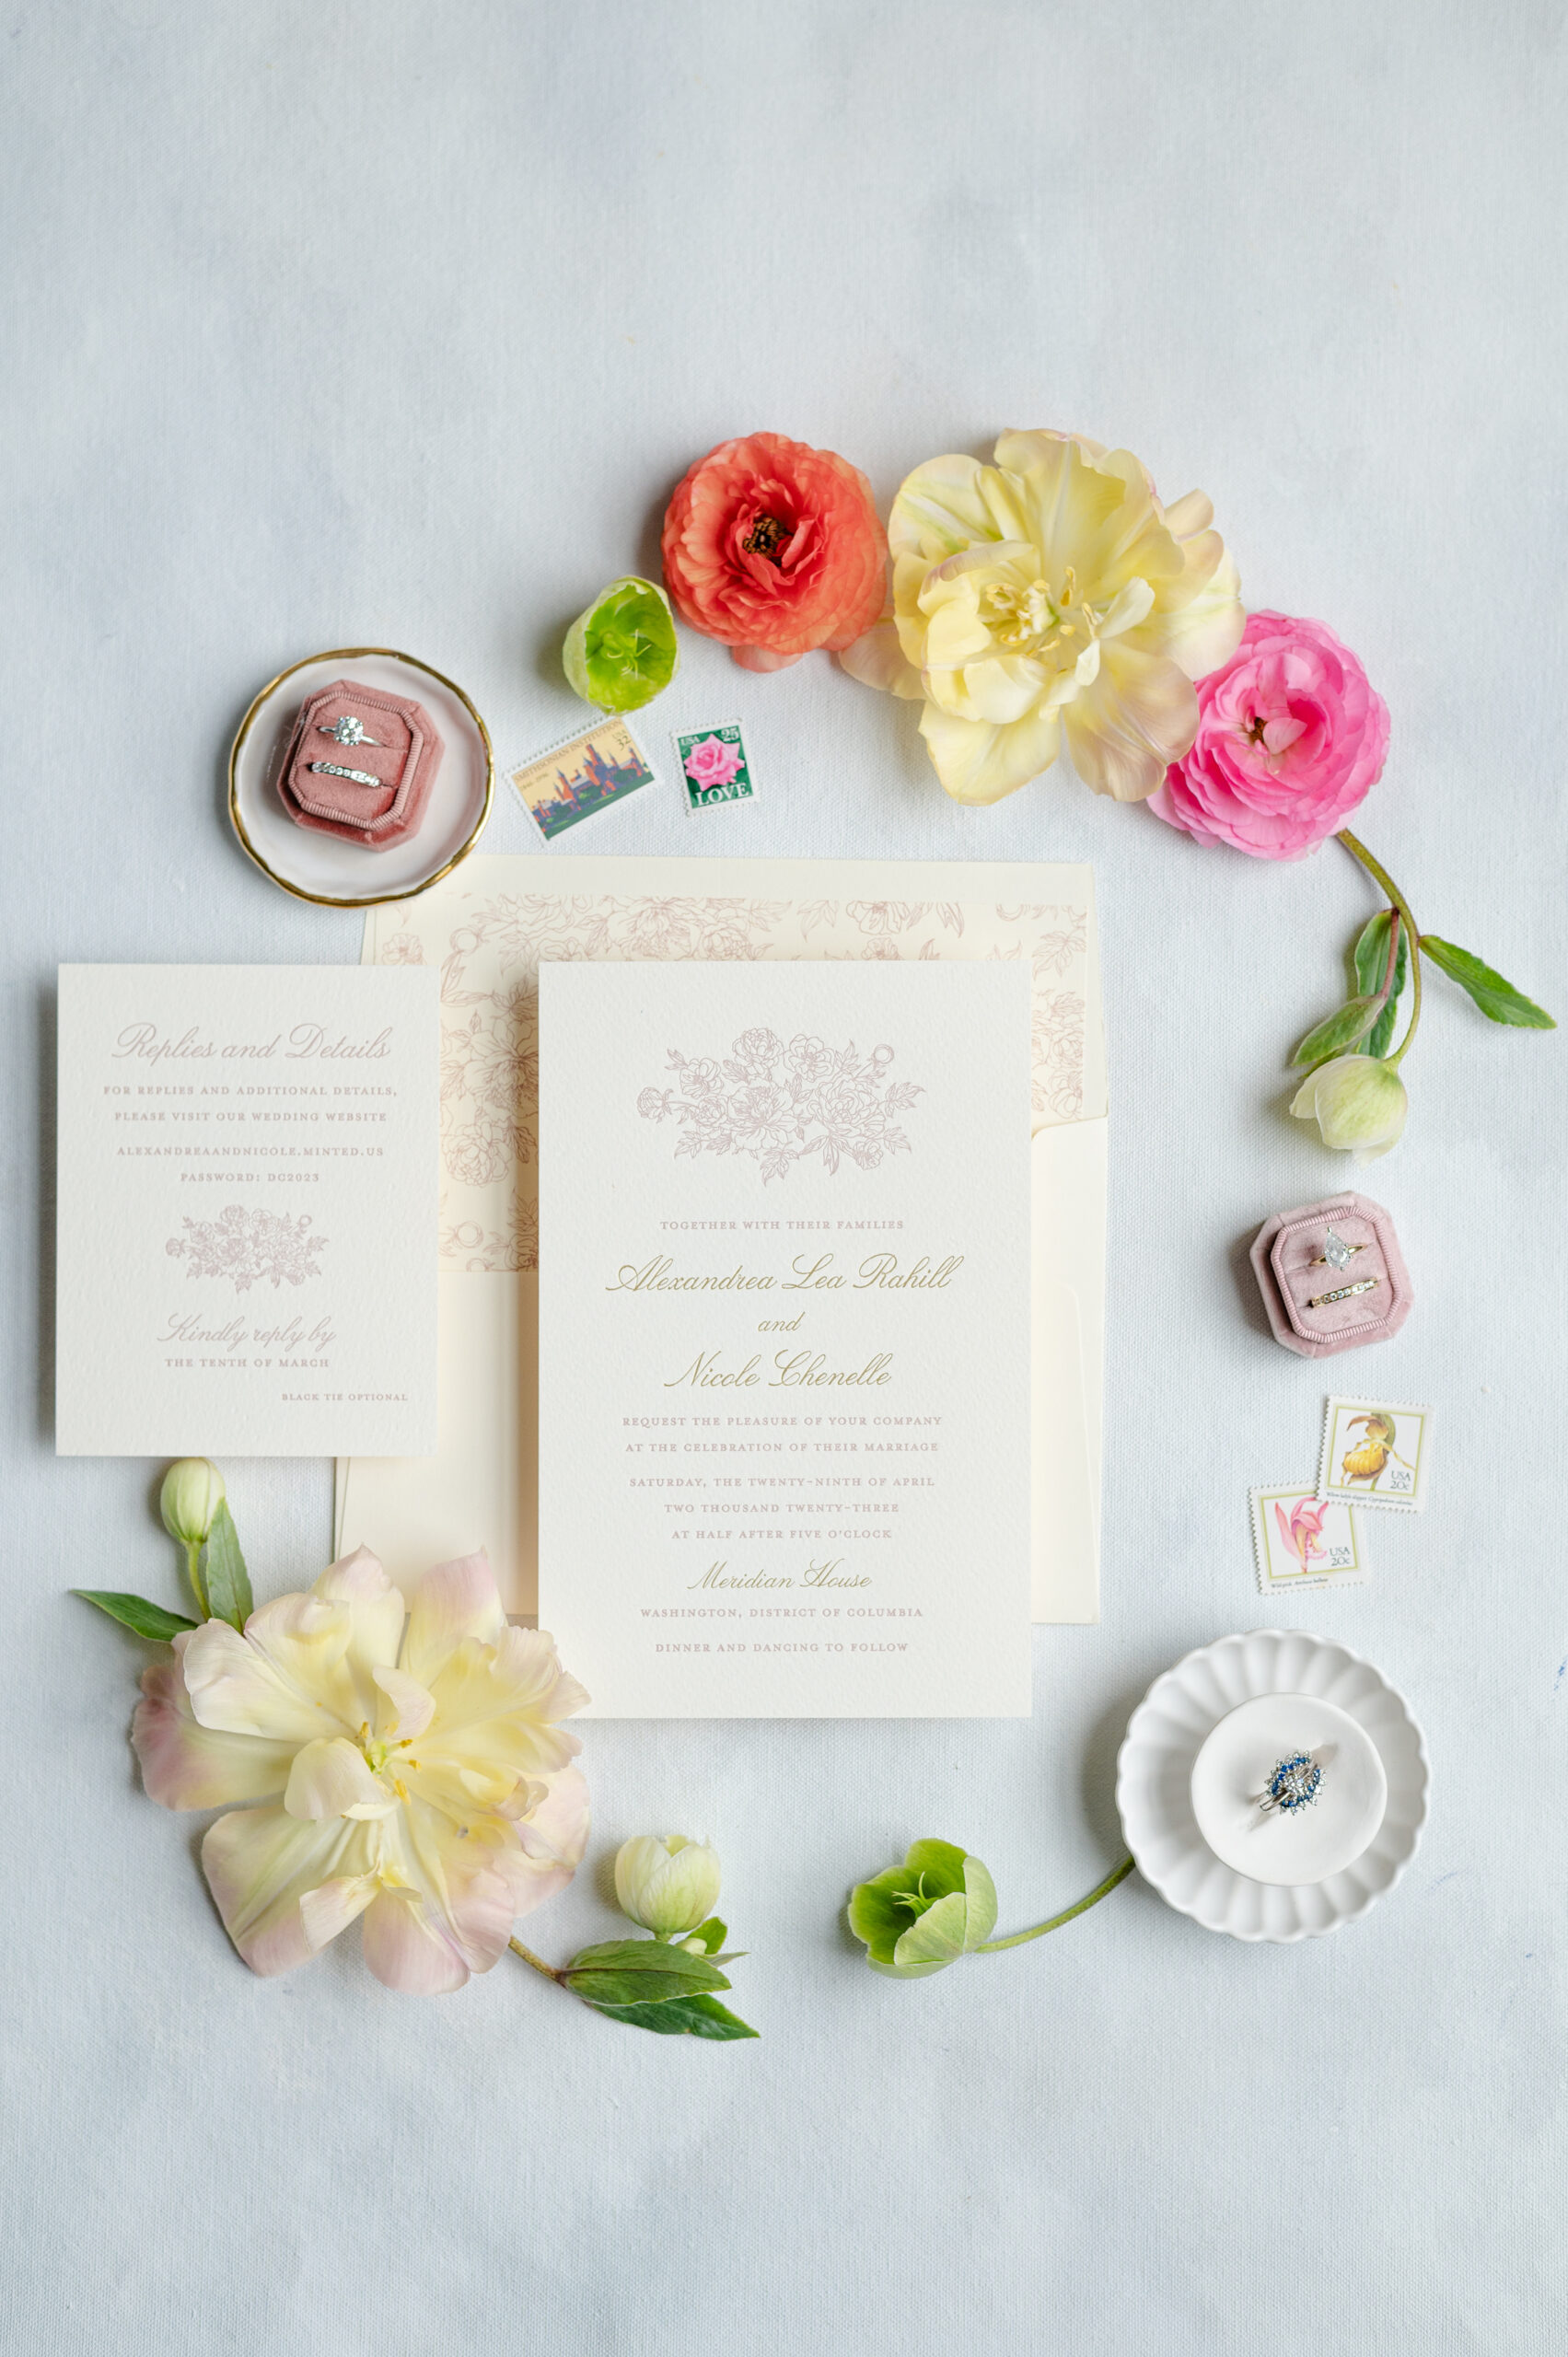 Meridian-House-Spring-wedding-invitation-two-brides-1